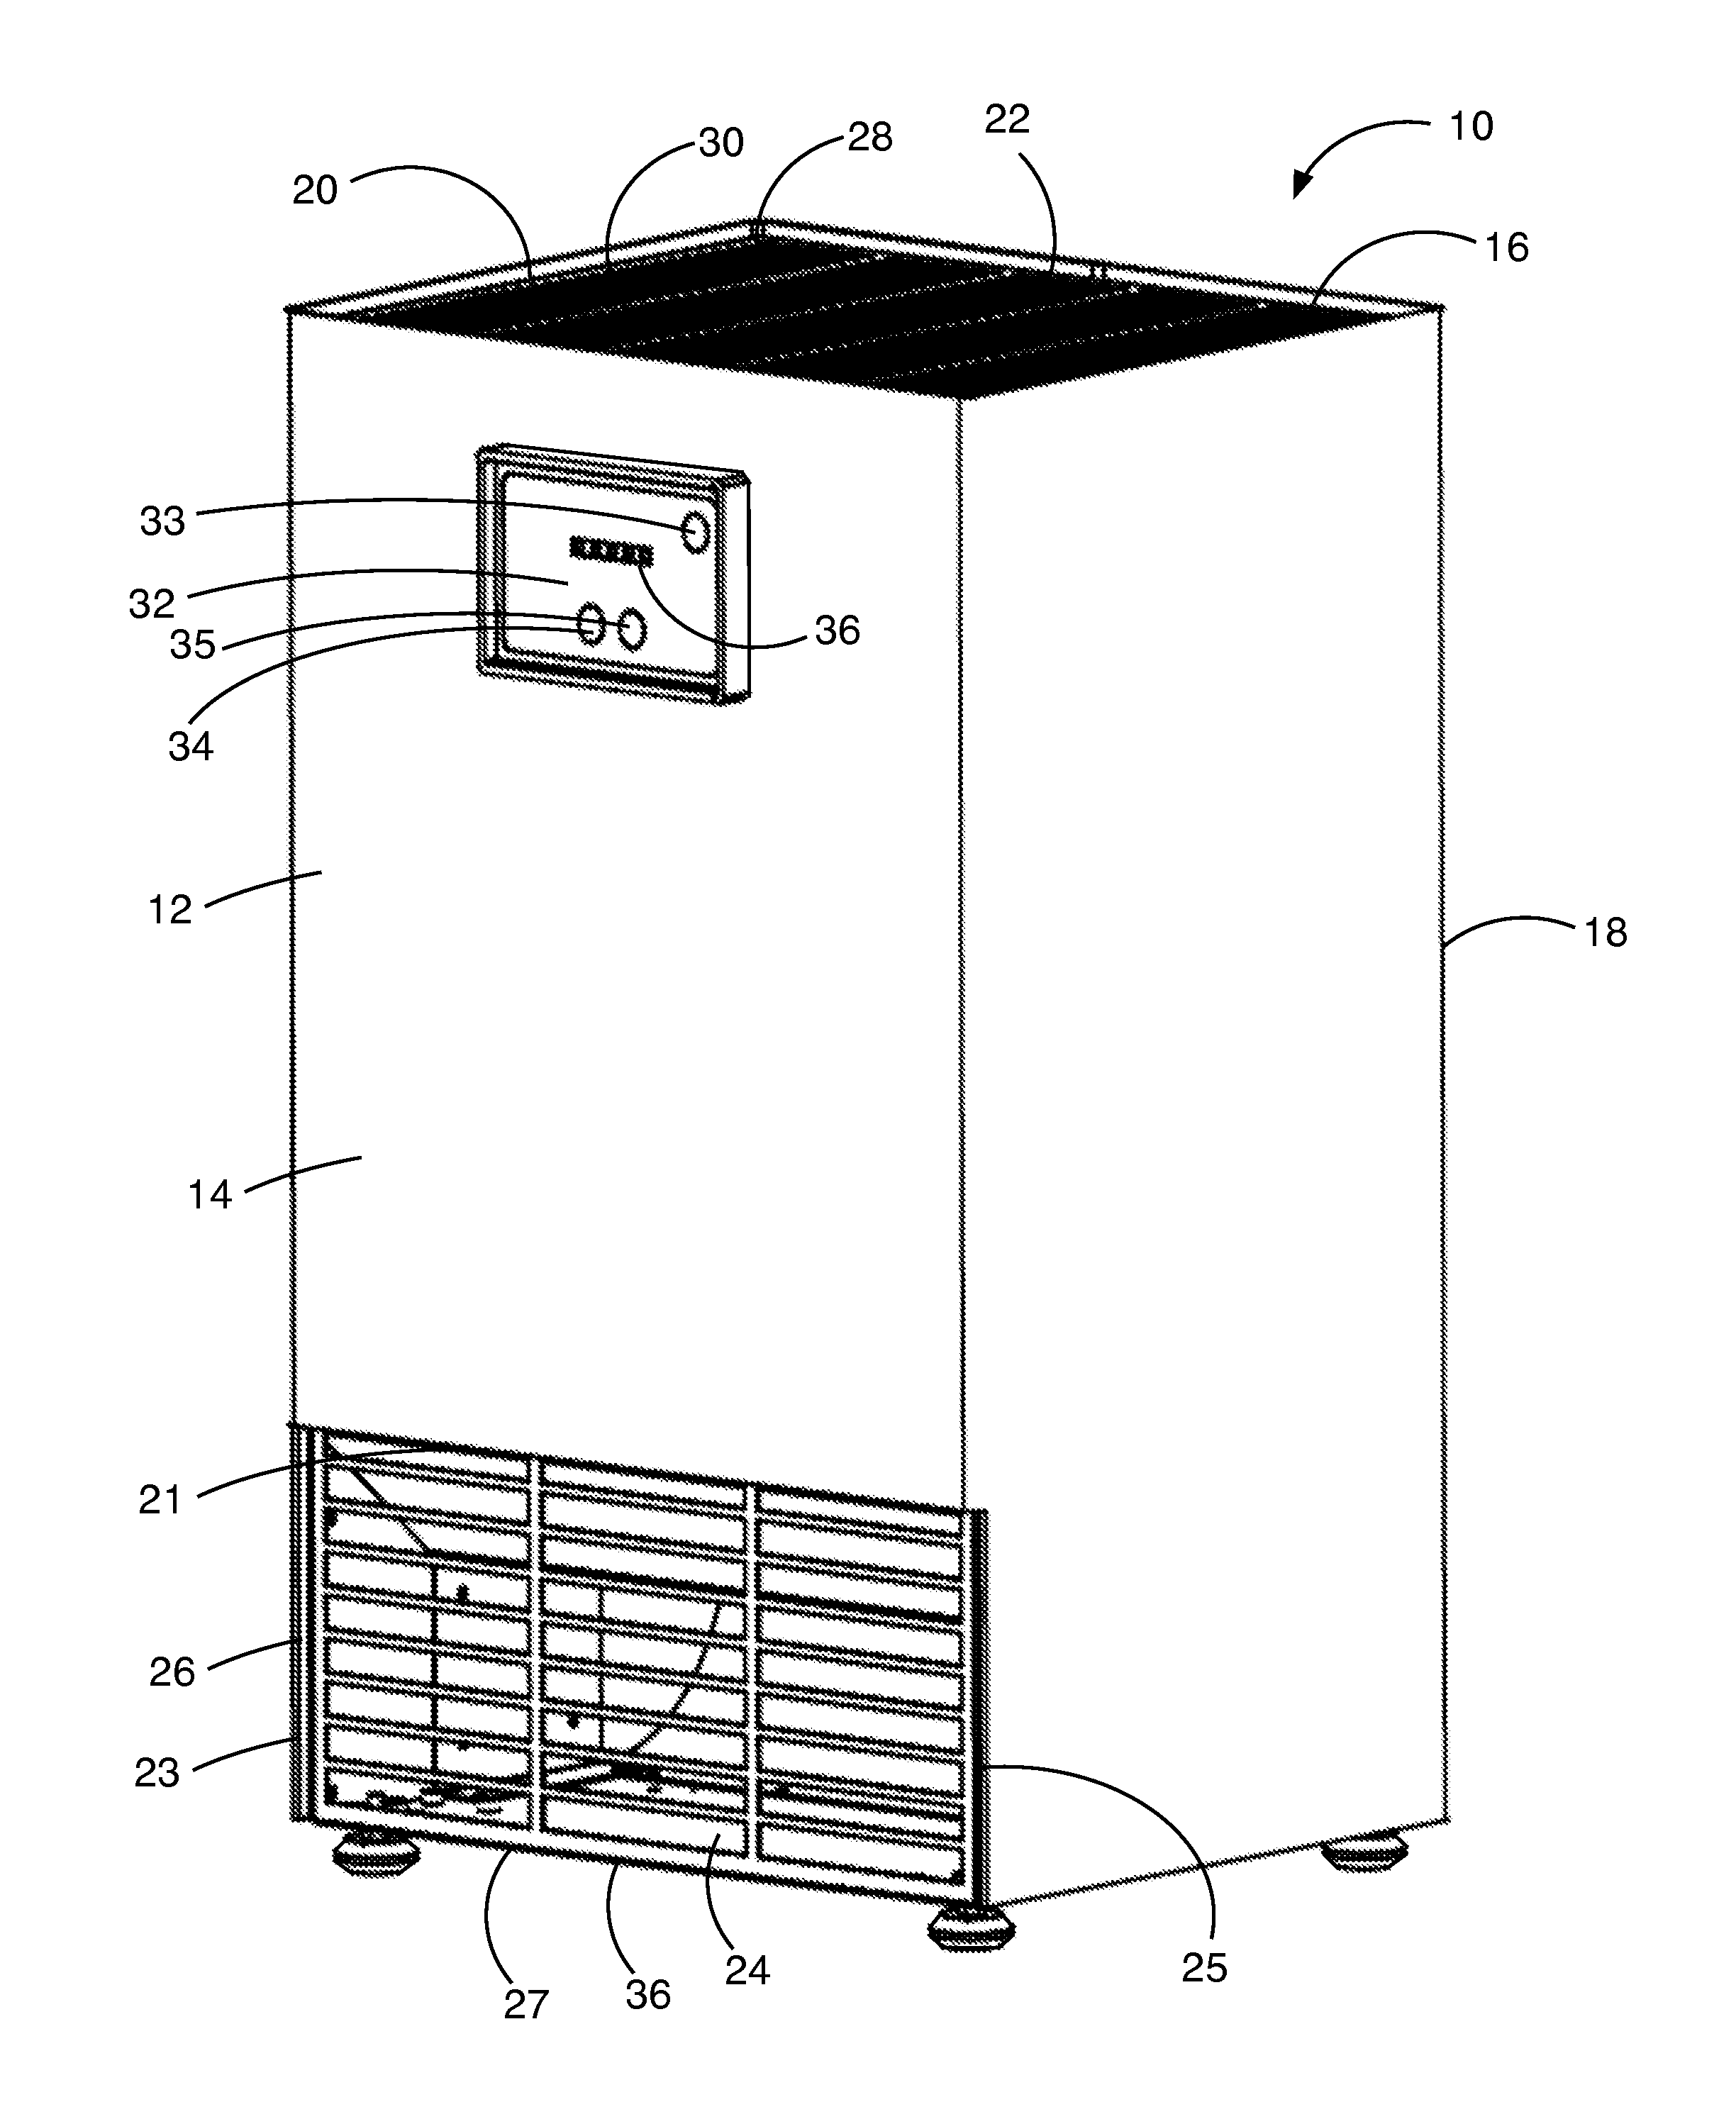 Apparatus for filtering air